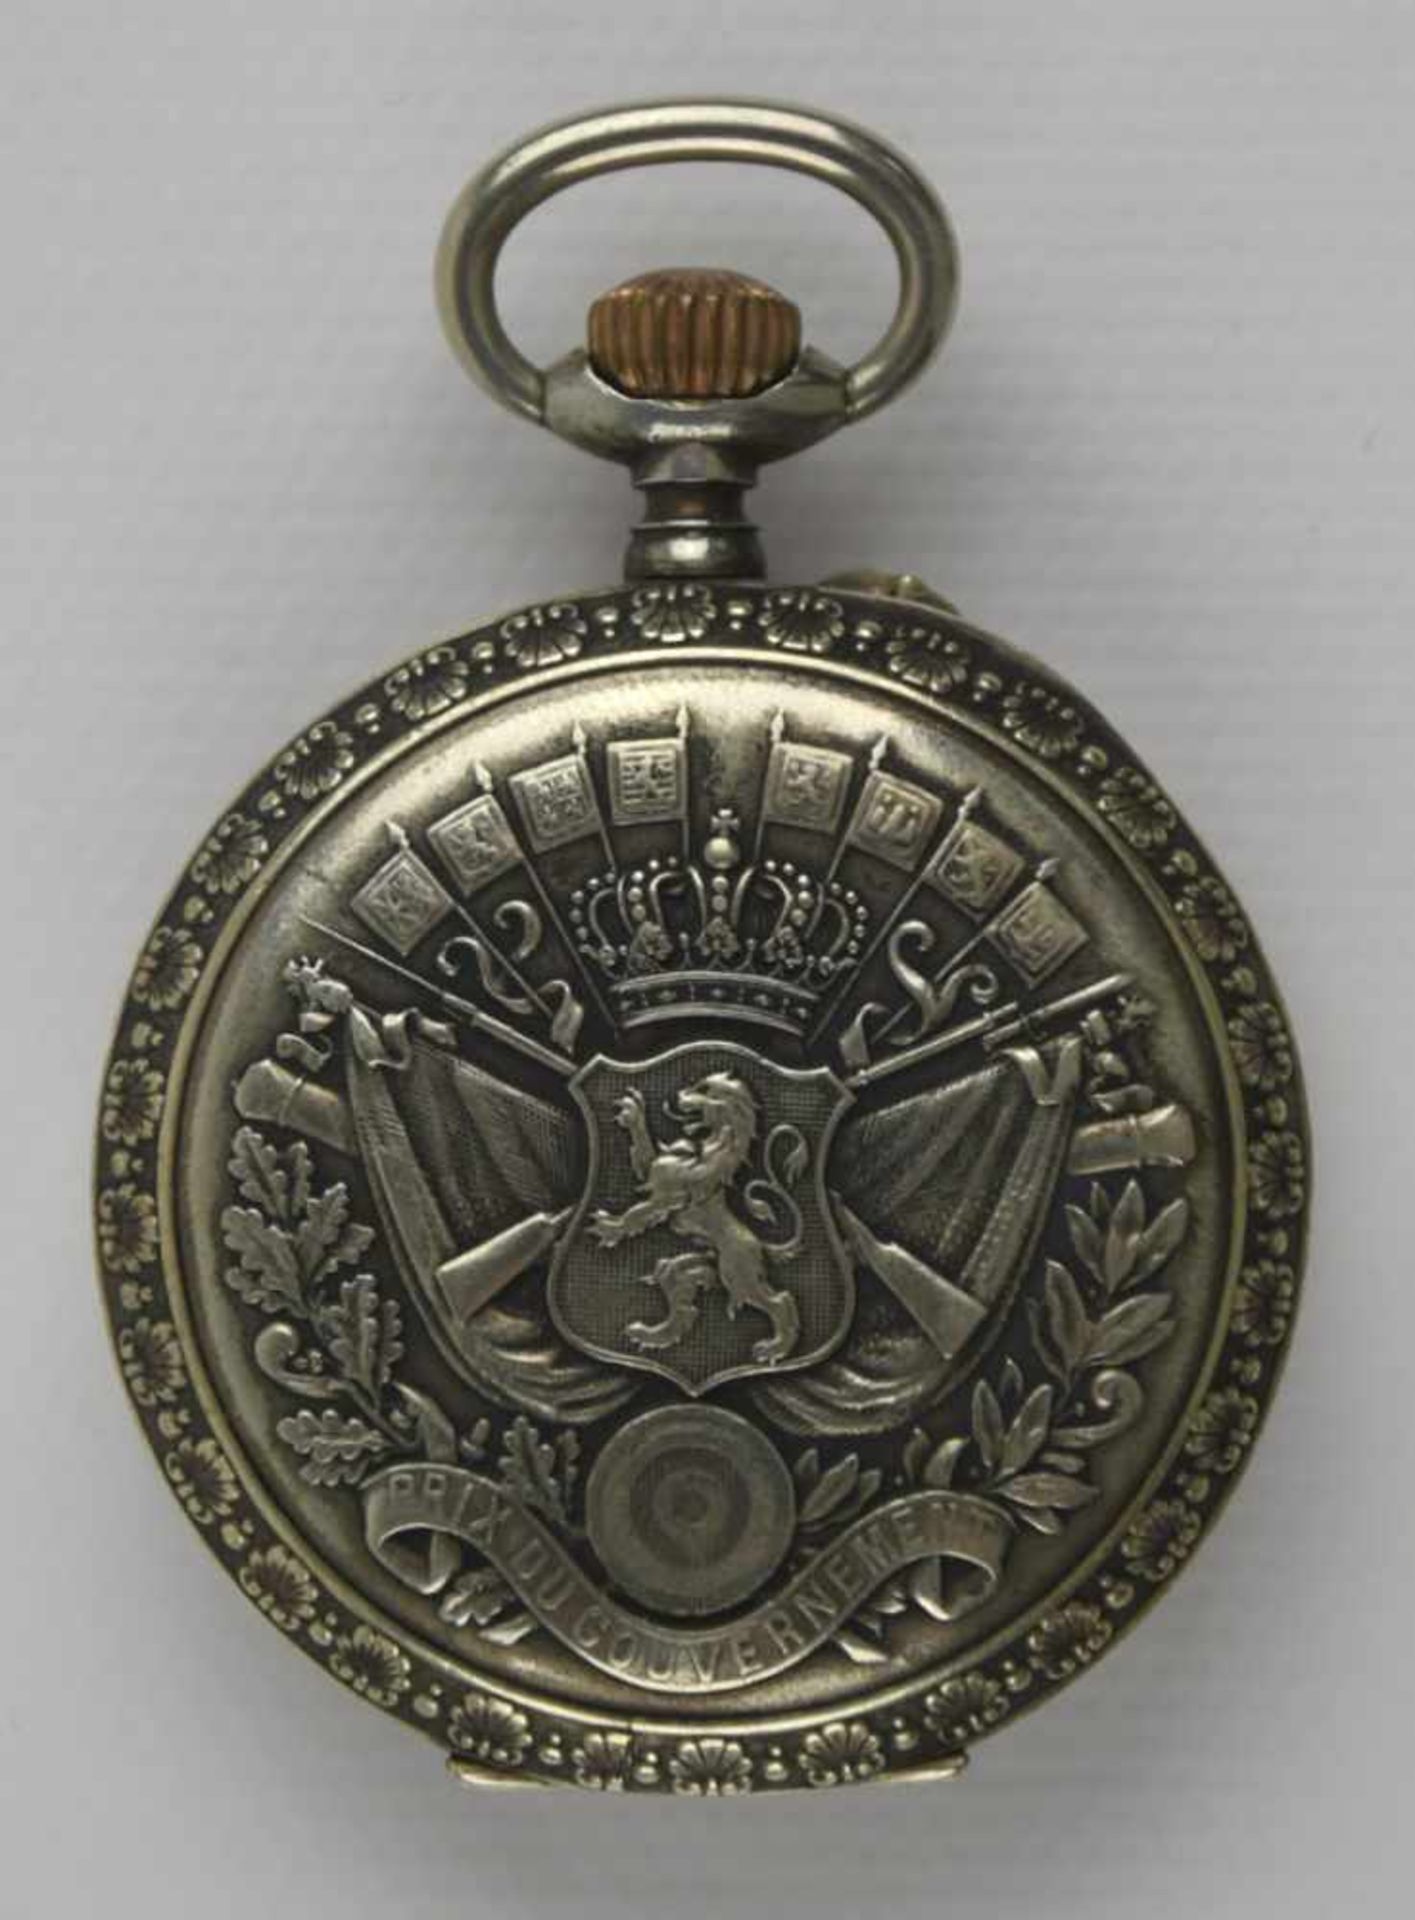 Belgium - Pocket watch with King Leopold II's effigy - Shooting prize 1902 PARFONRYBelgique - Montre - Image 2 of 2